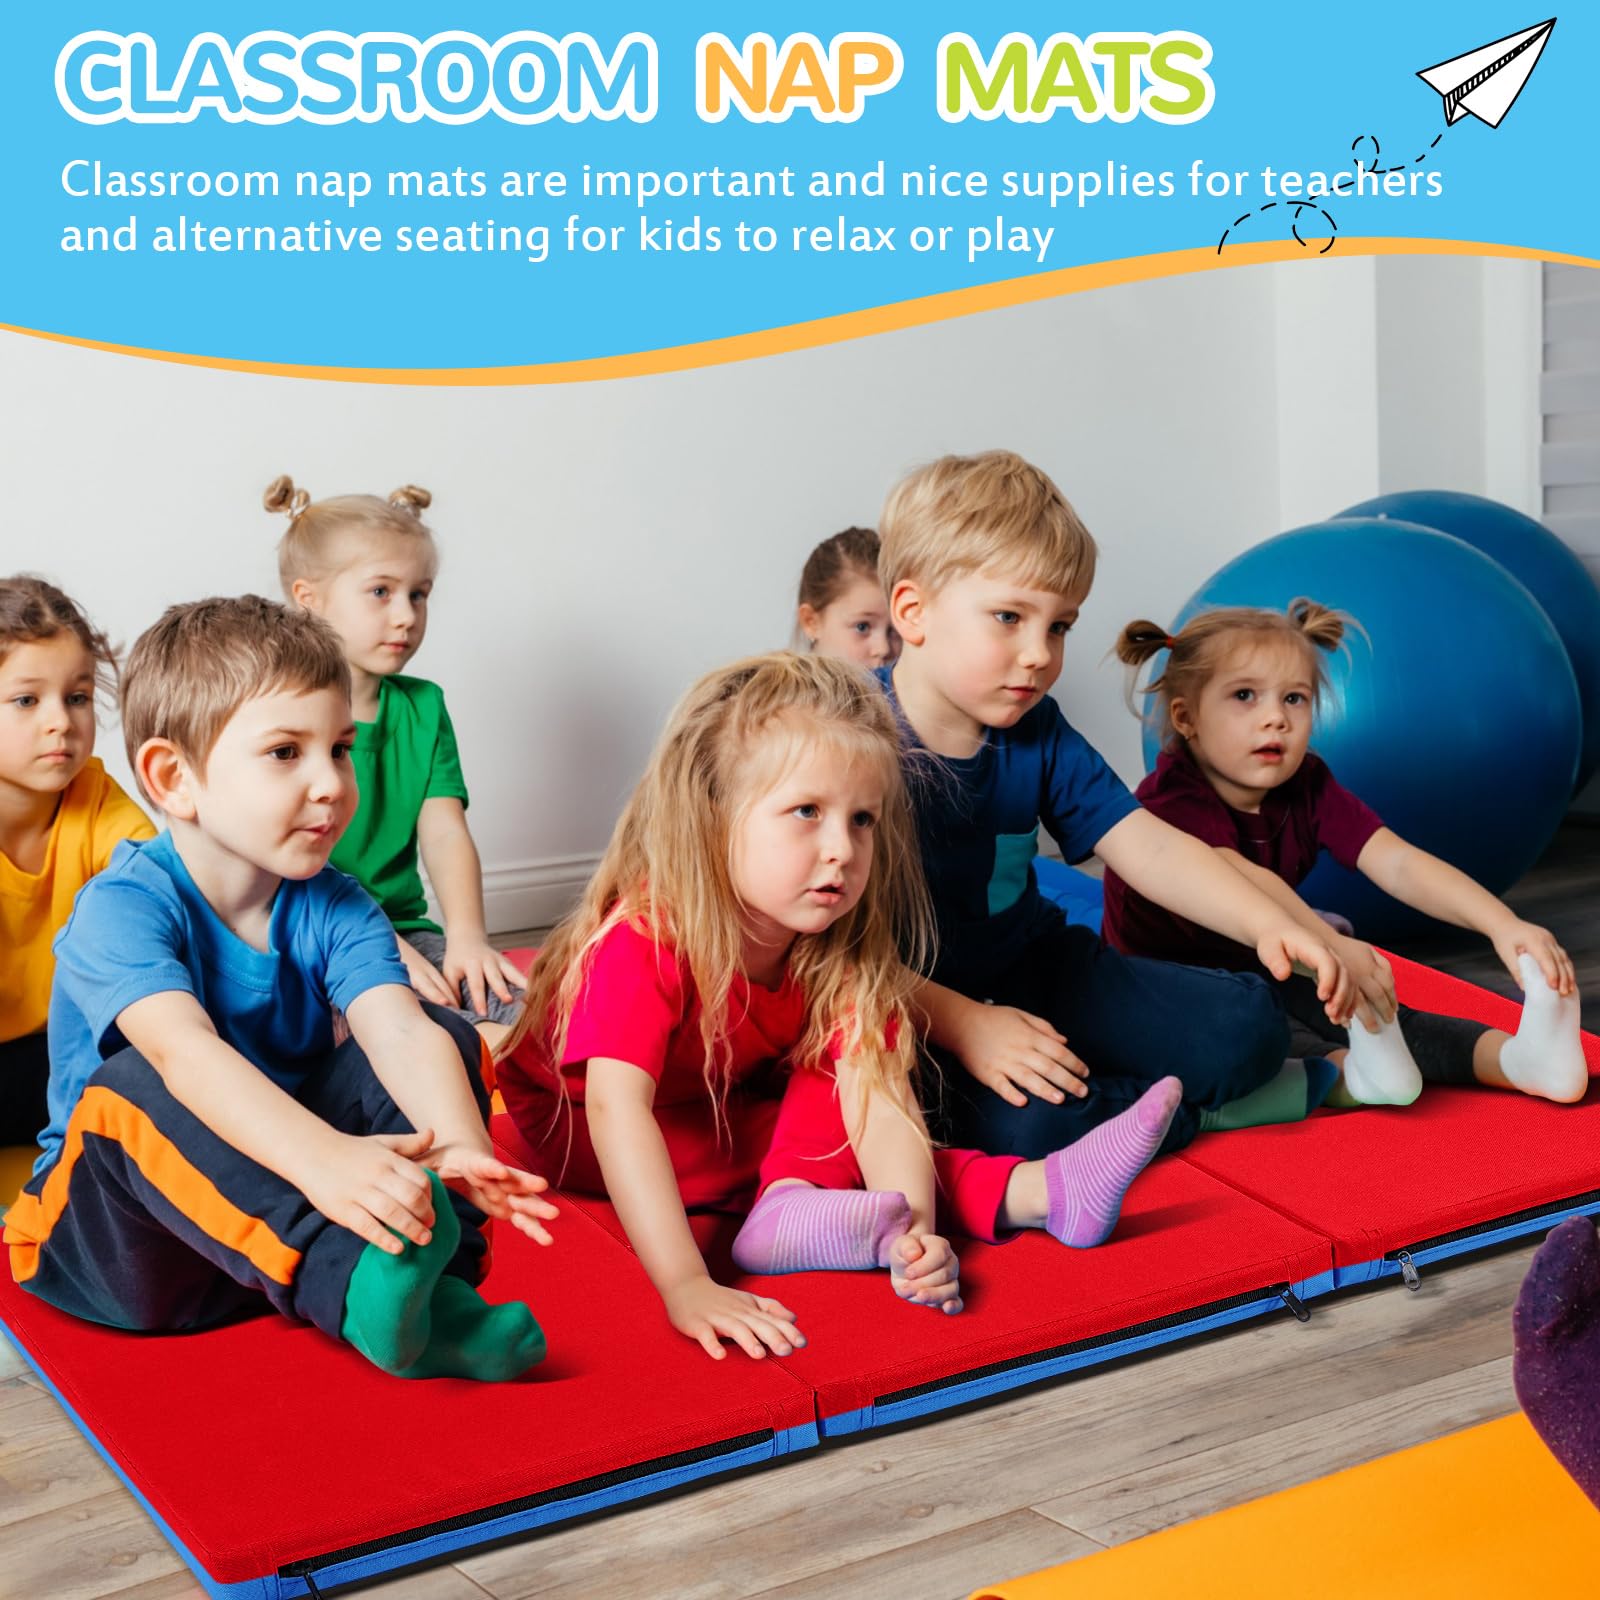 Nuanchu 6 Pack 3 Fold Daycare Nap Mats Preschool Toddler Sleeping Nap Mats Portable Rest Nap Mat Folding Nap Floor Mats with Name Tag for Classroom Furniture Kindergarten Daycare (Red, Blue)